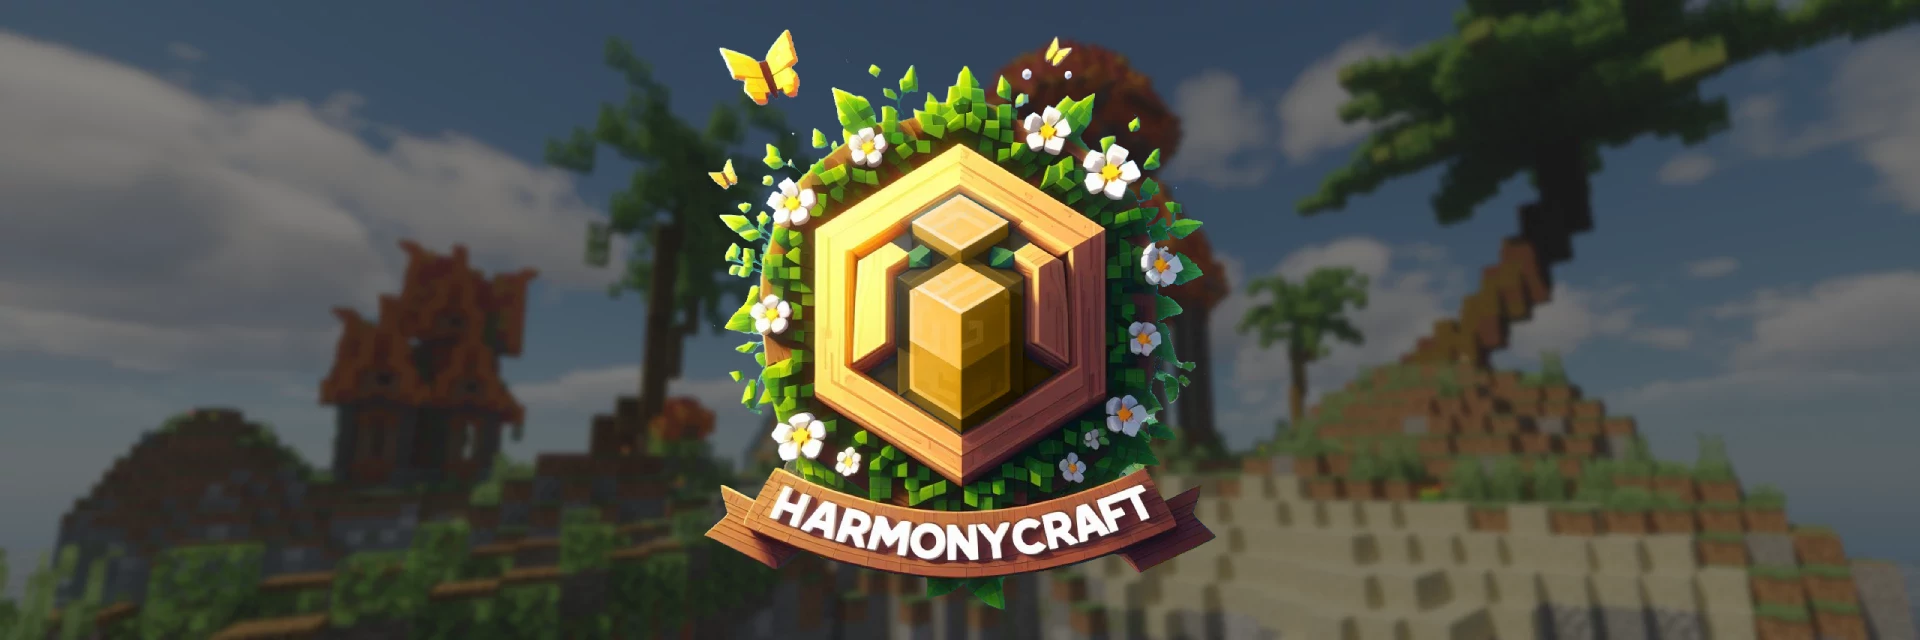 HarmonyCraft